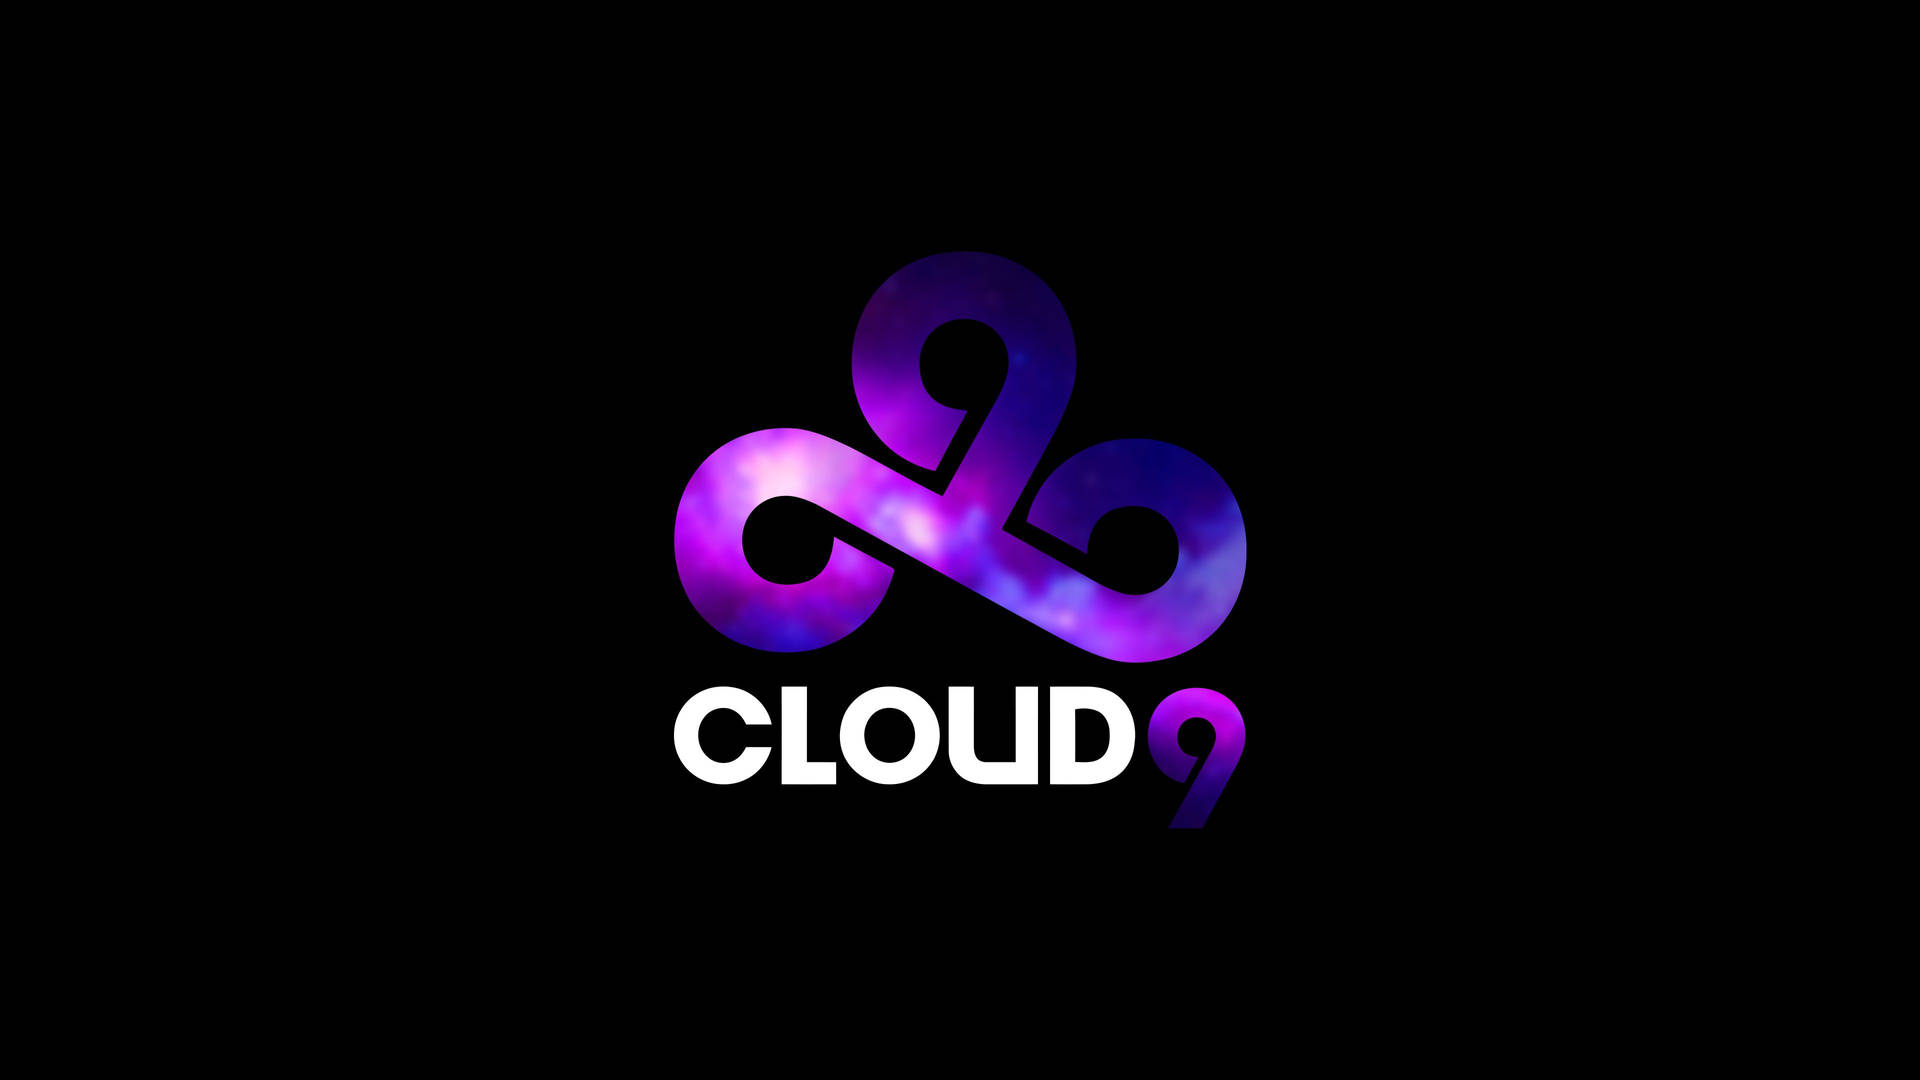 Deep Space Purple Cloud9 Logo Background